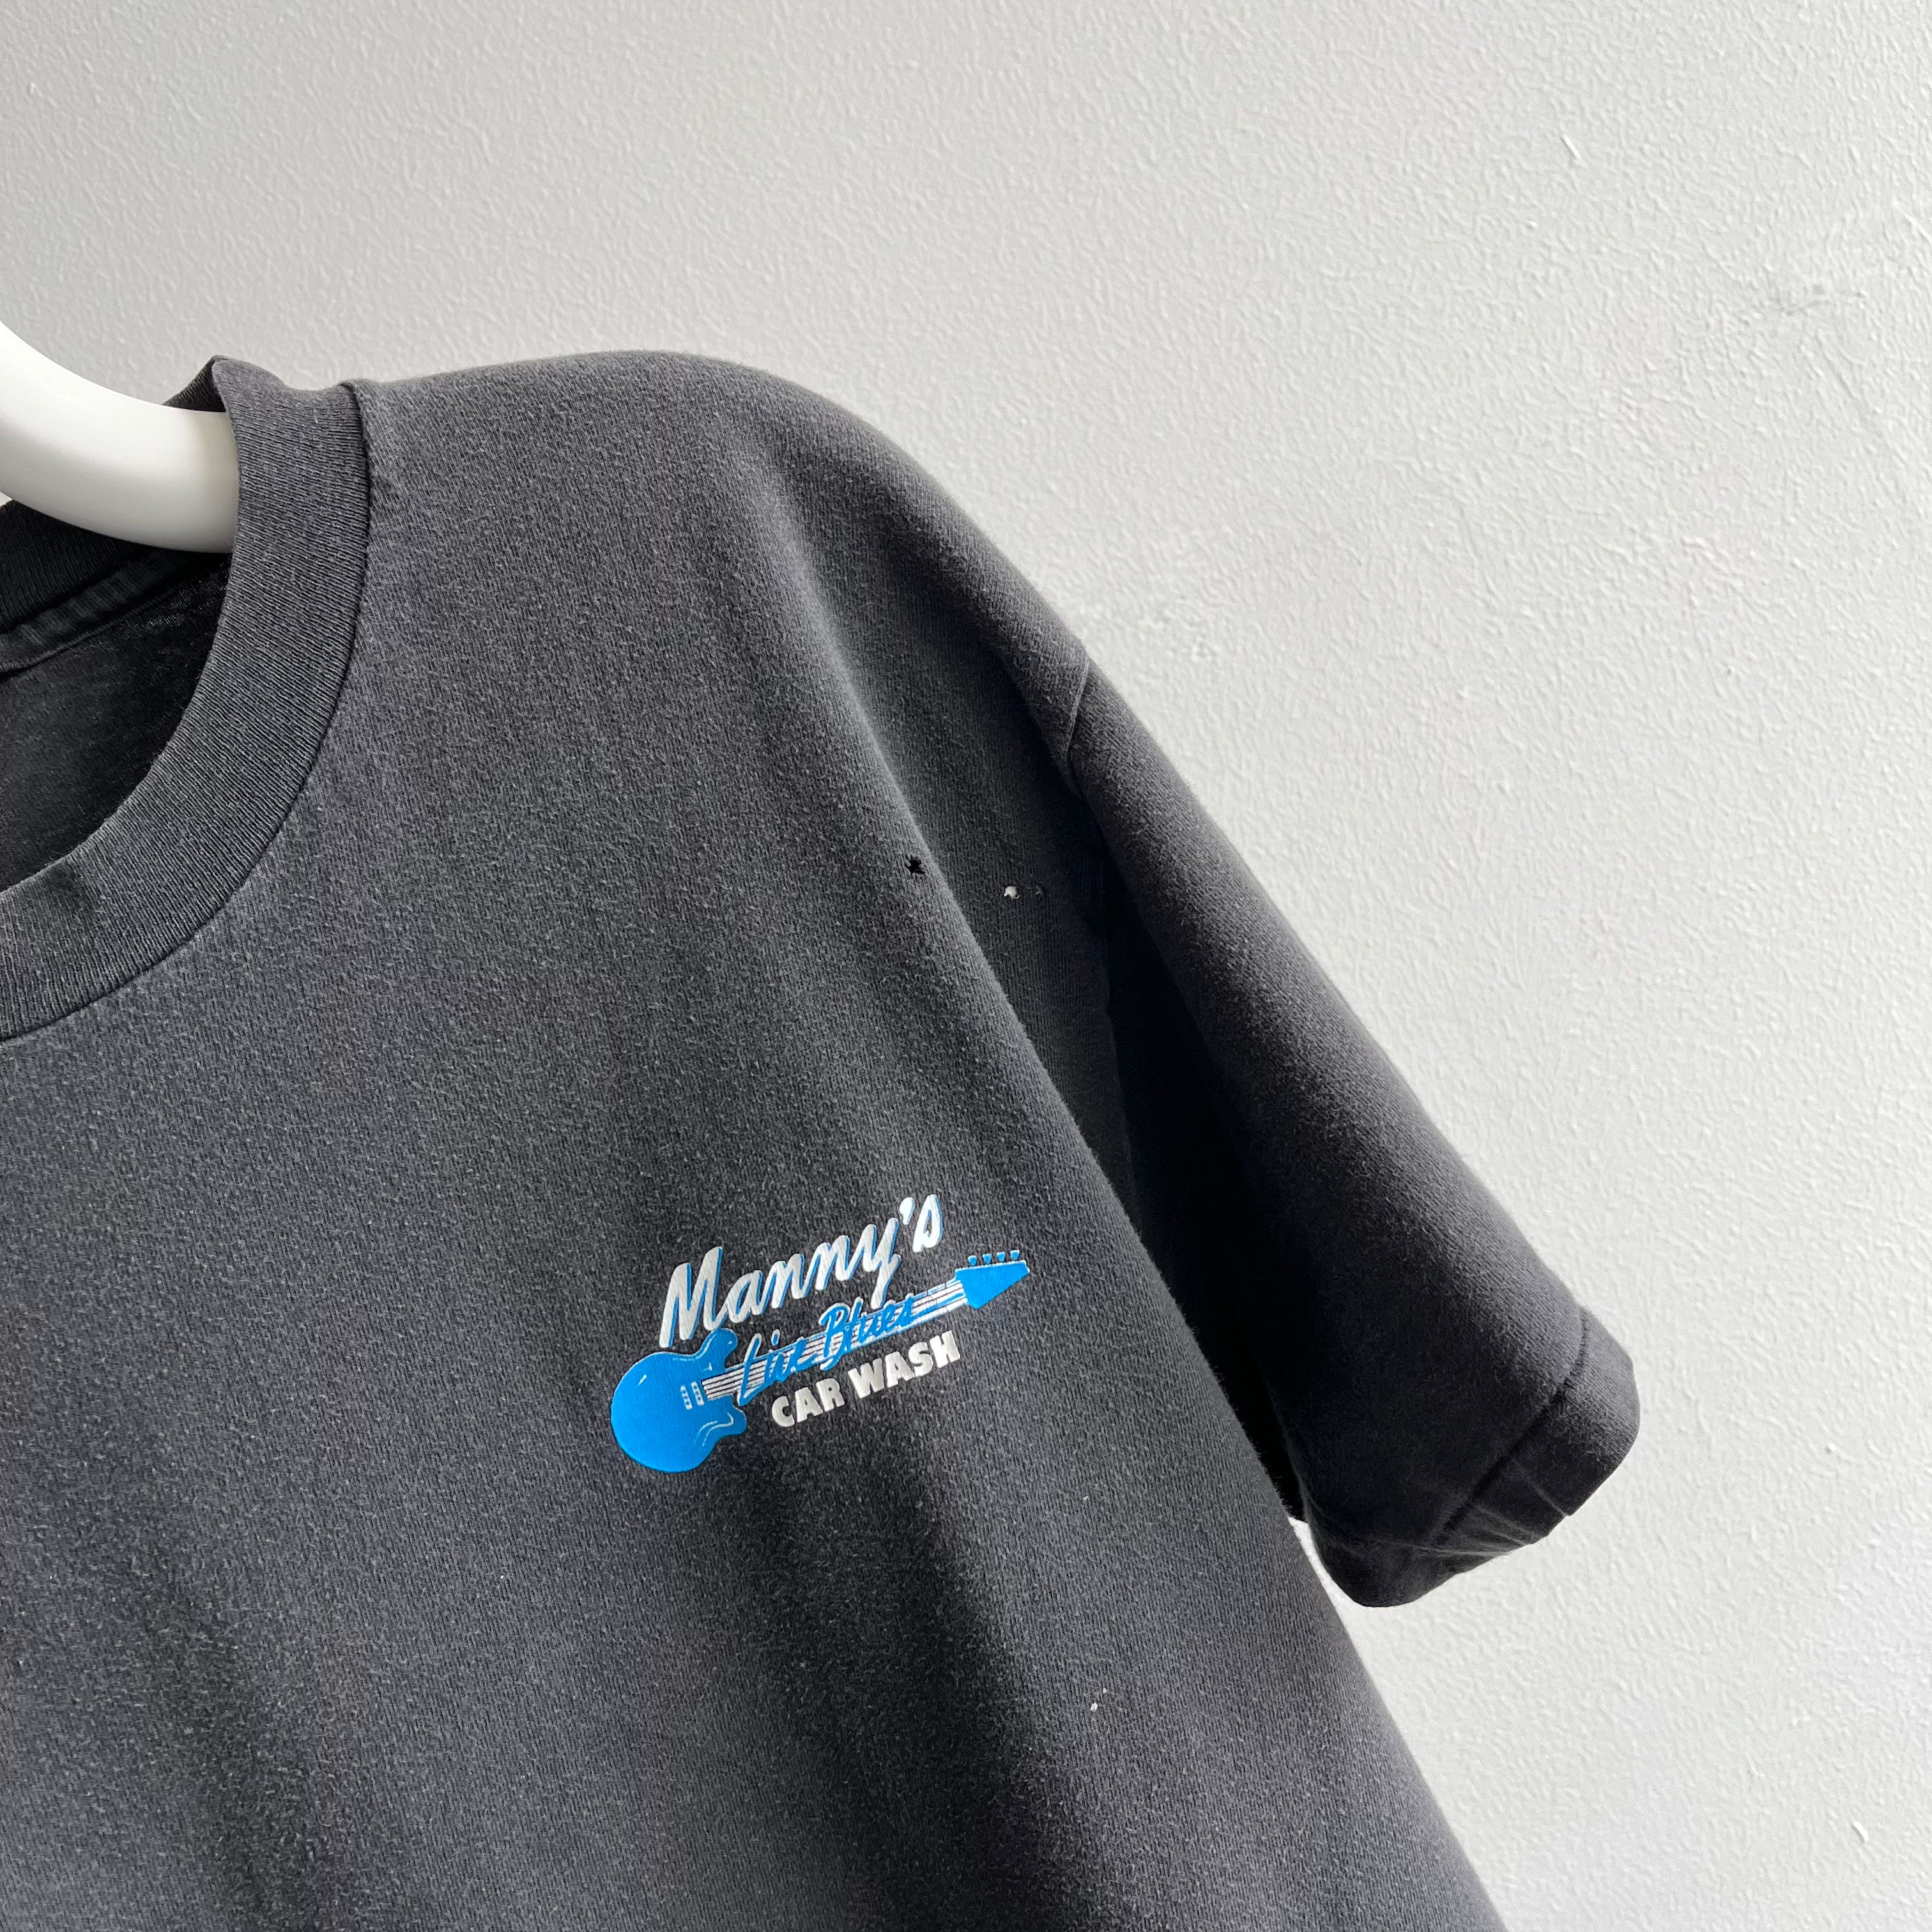 1990s Manny's Car Wash, NYC T-Shirt